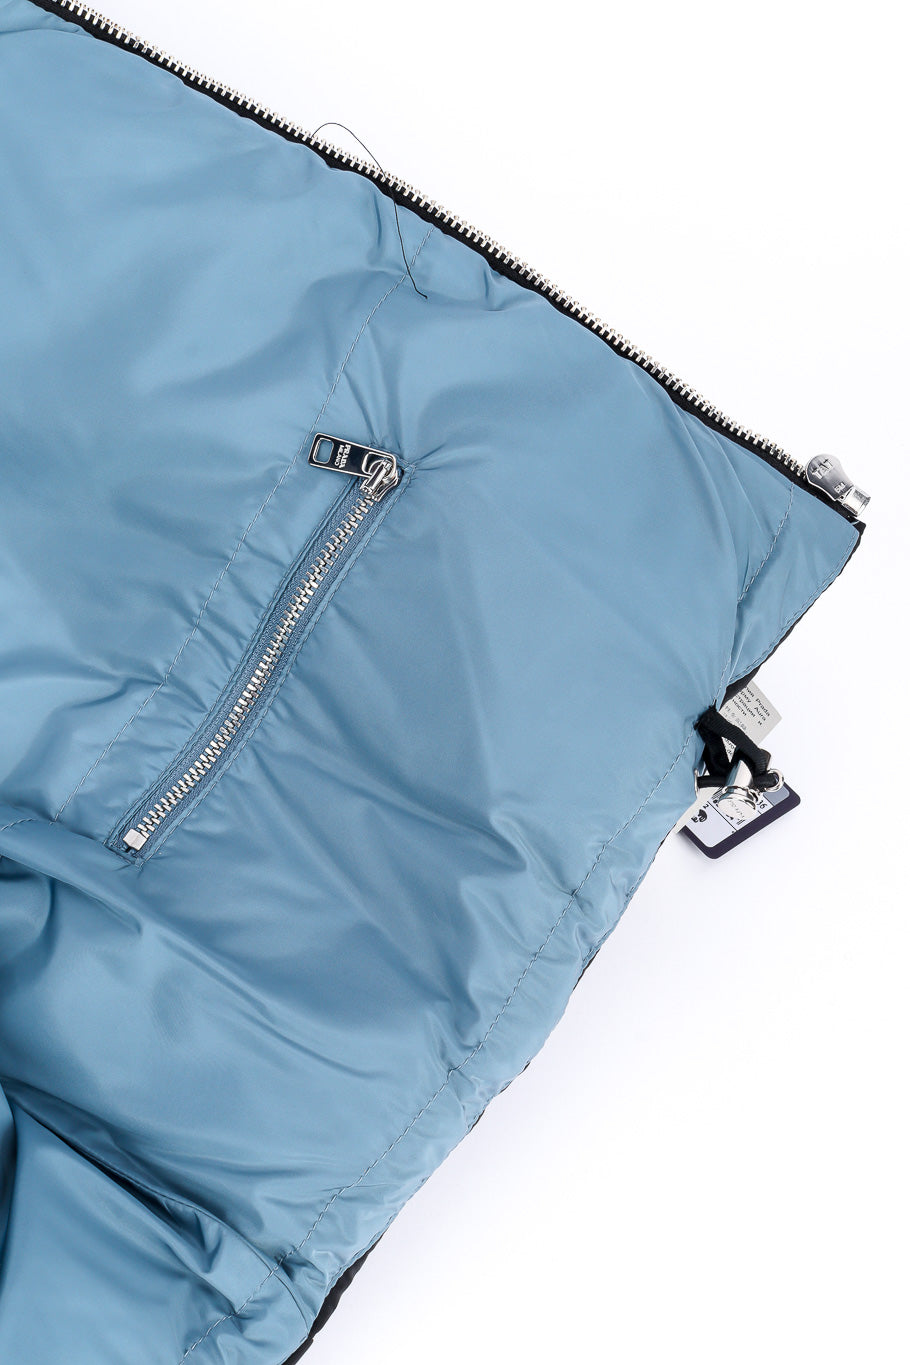 Prada Re-nylon Cropped Puffer Vest view of inner pocket closeup @Recessla